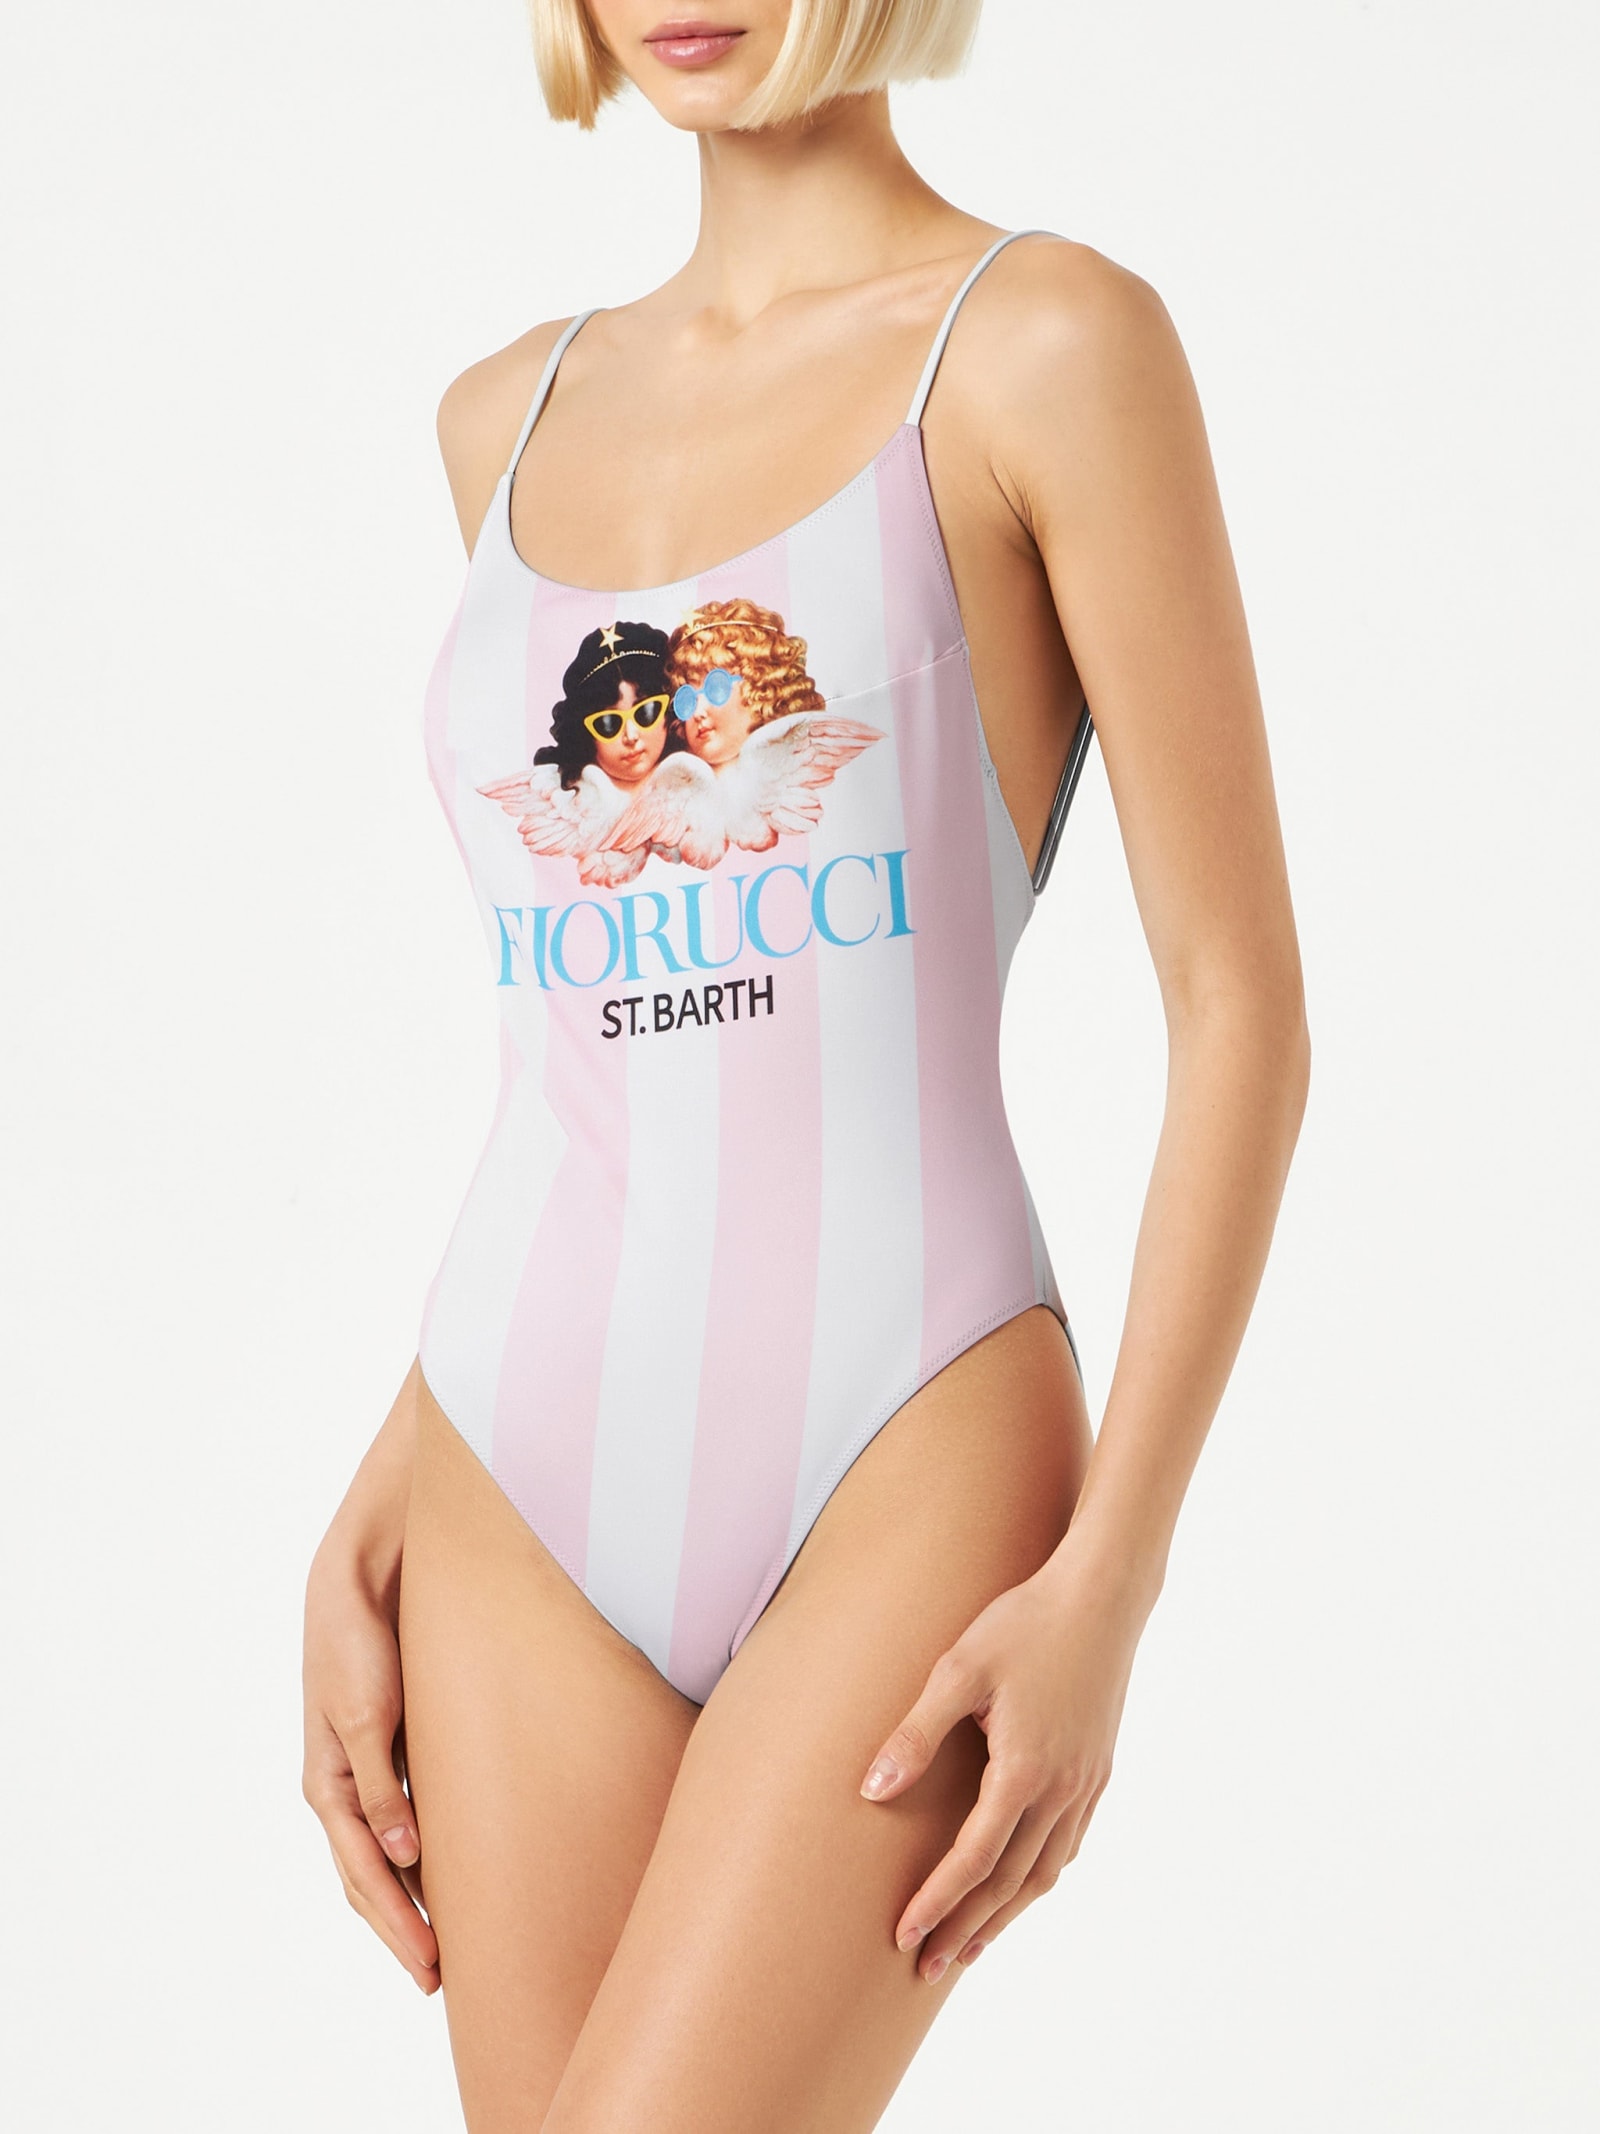 Stripes Angels Fiorucci One Piece Swimsuit Fiorucci Special Edition